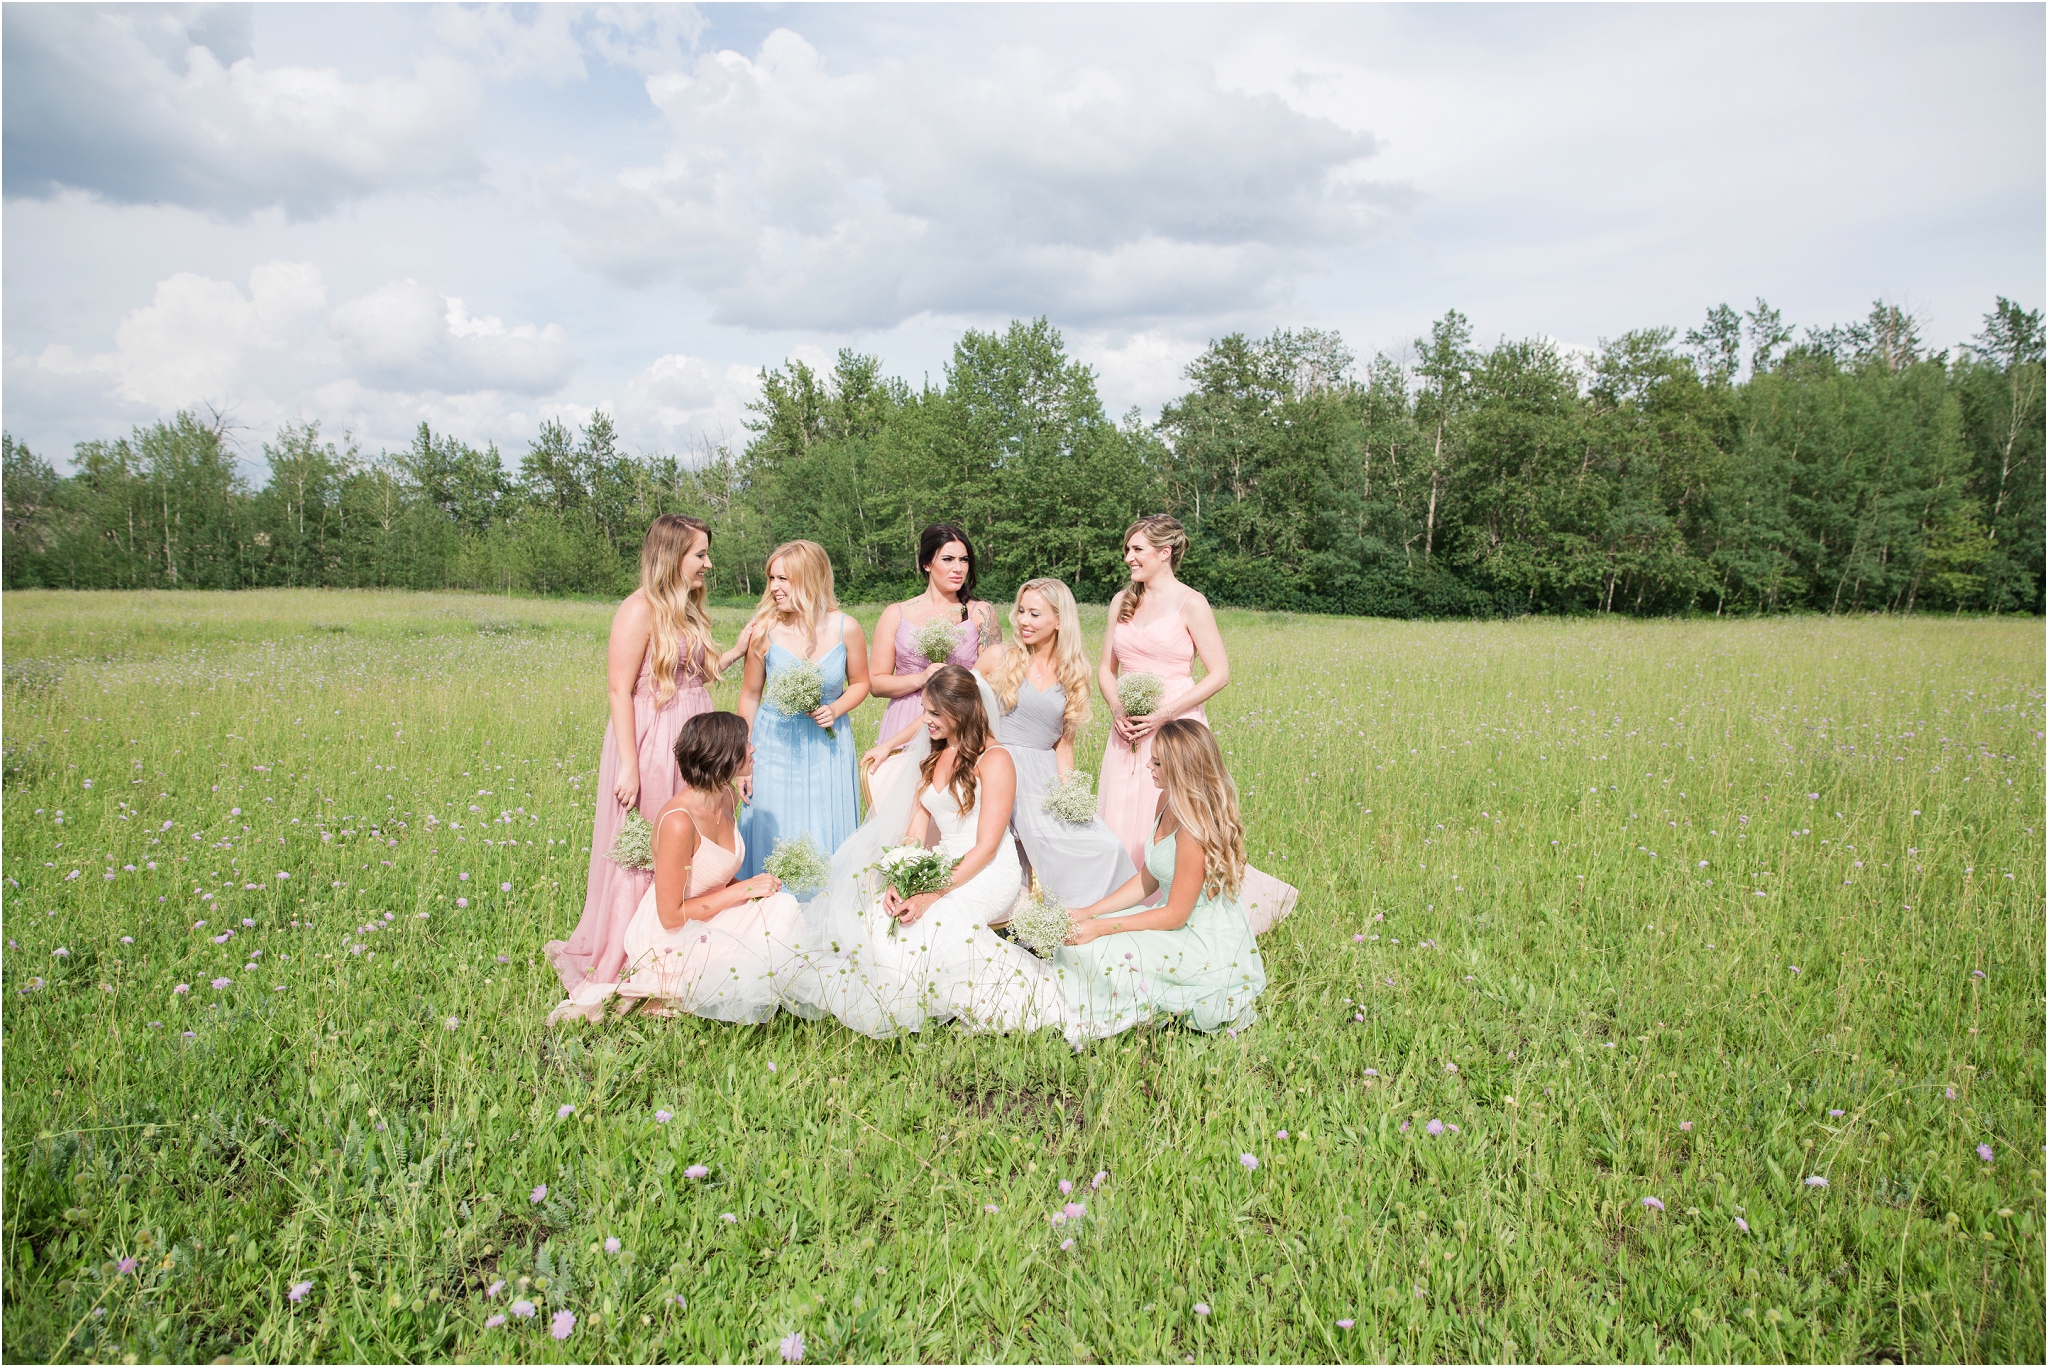 romantic field wedding photos edmonton nc photography pastel bridesmaid dresses